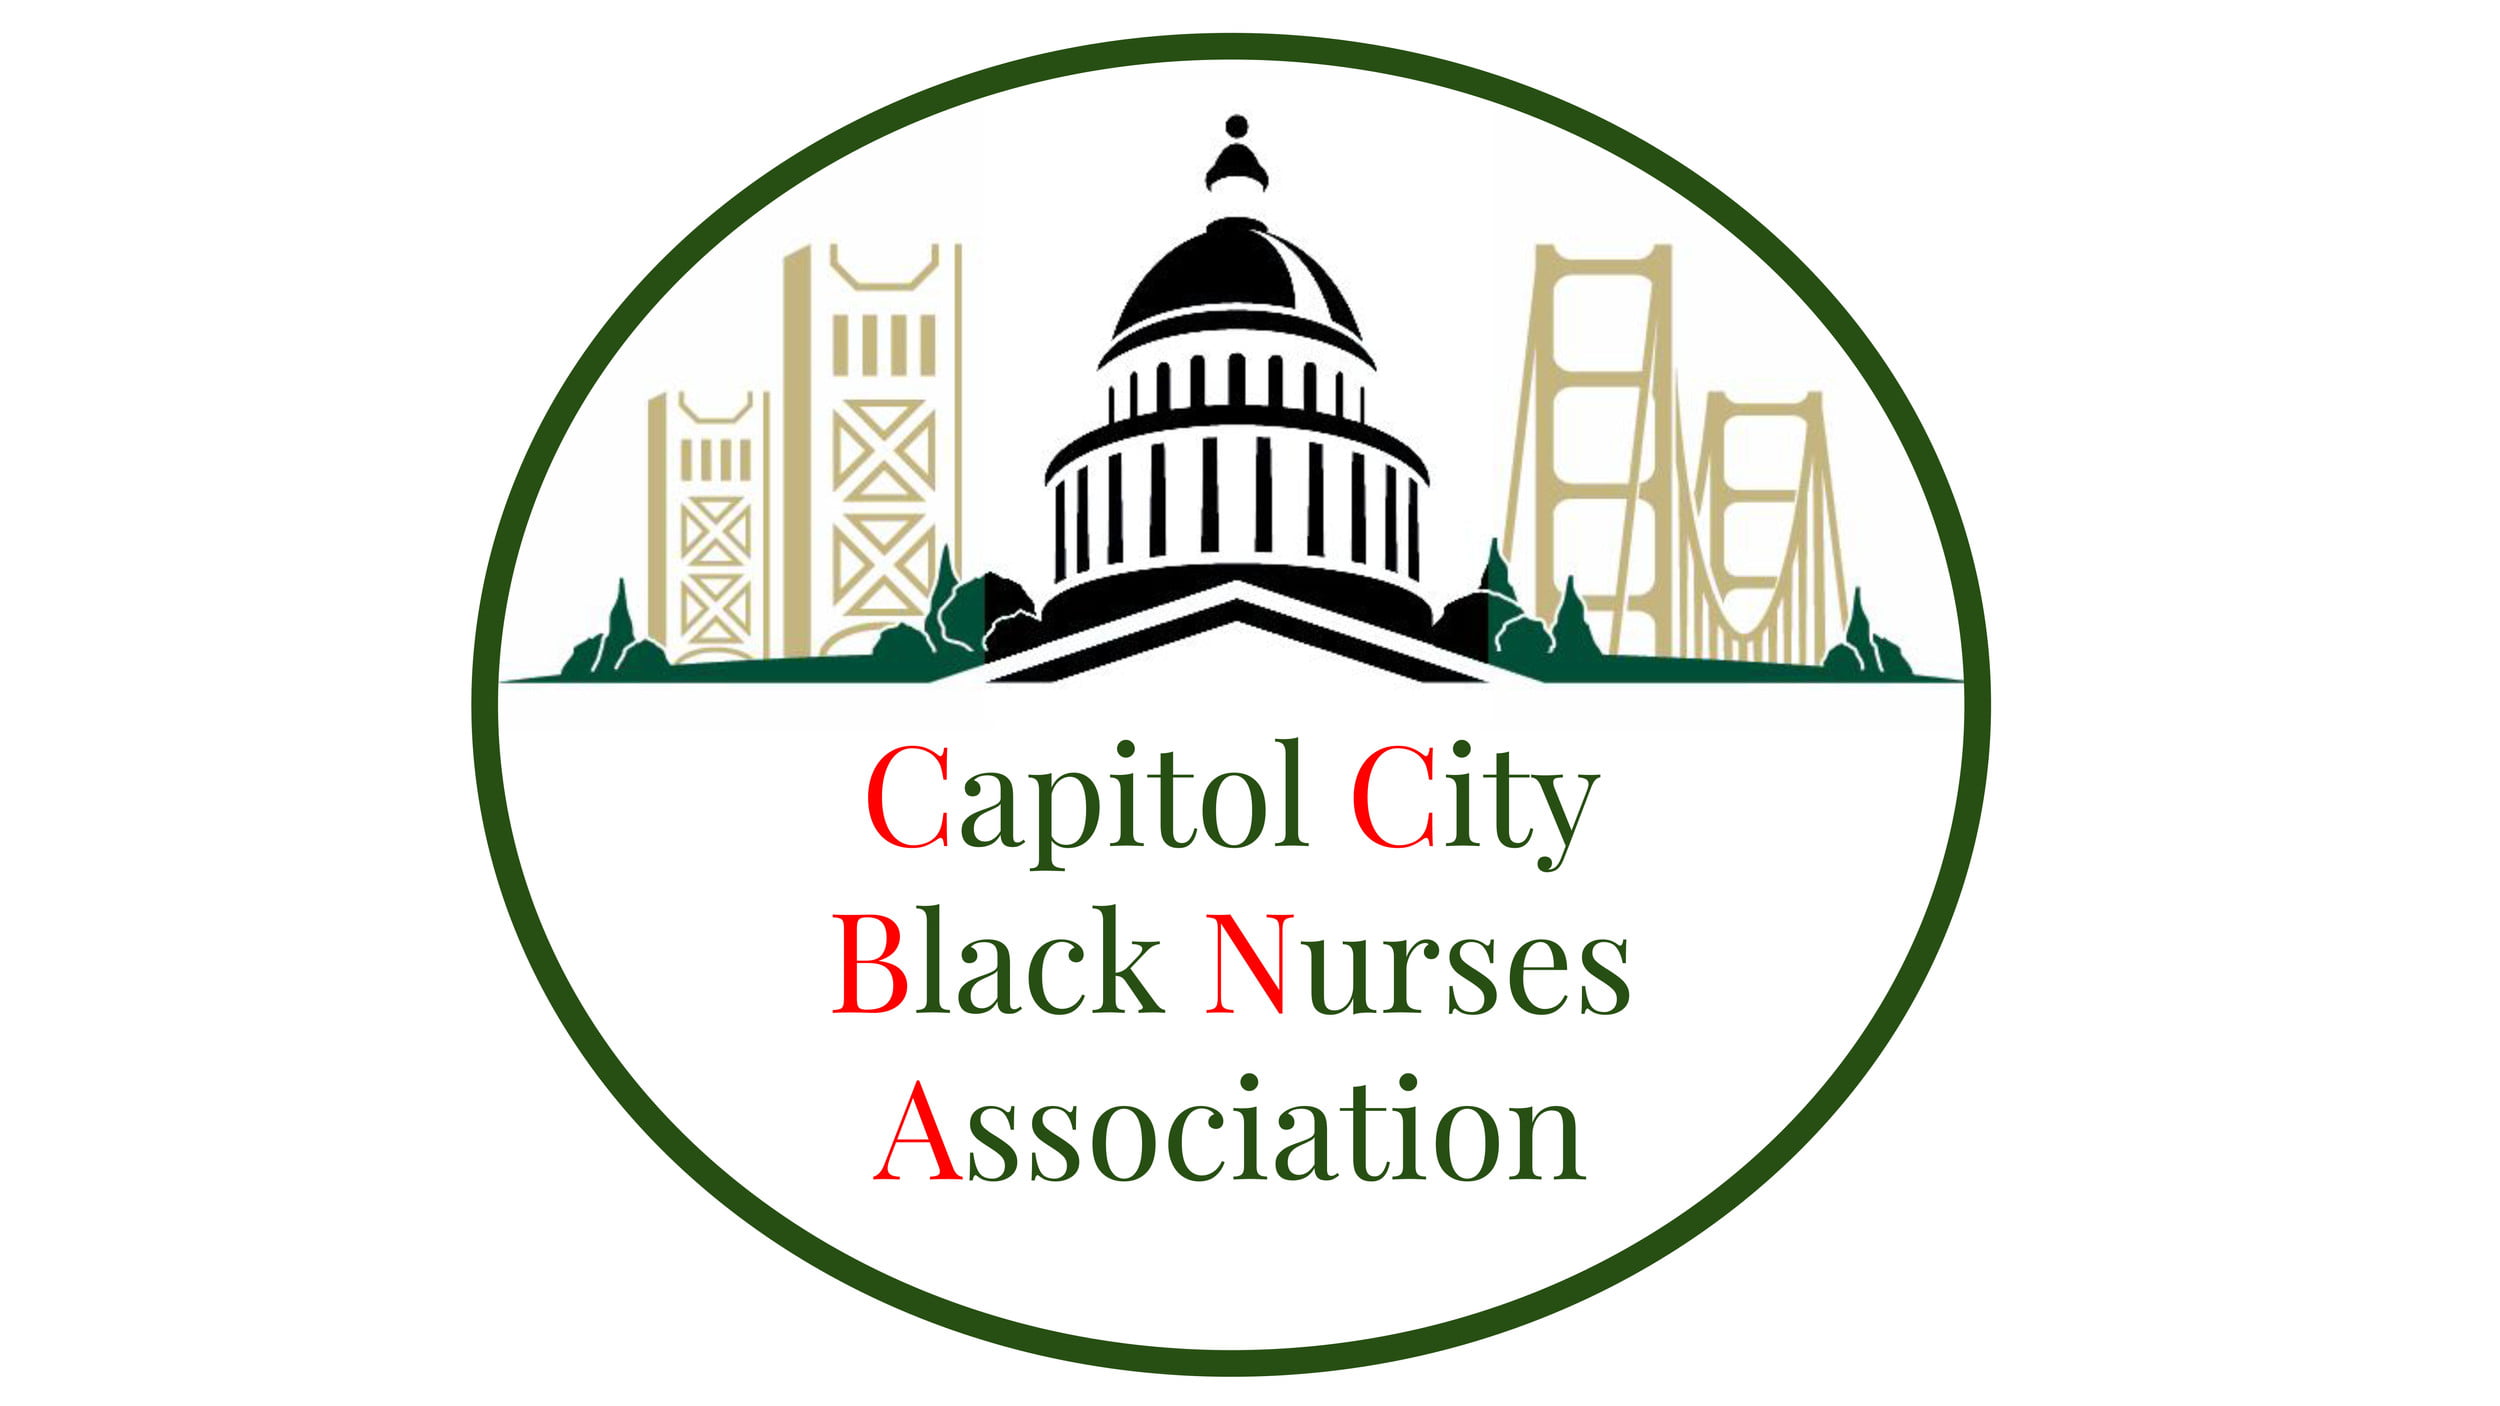 Capitol City Black Nurses Association (CCNBA)